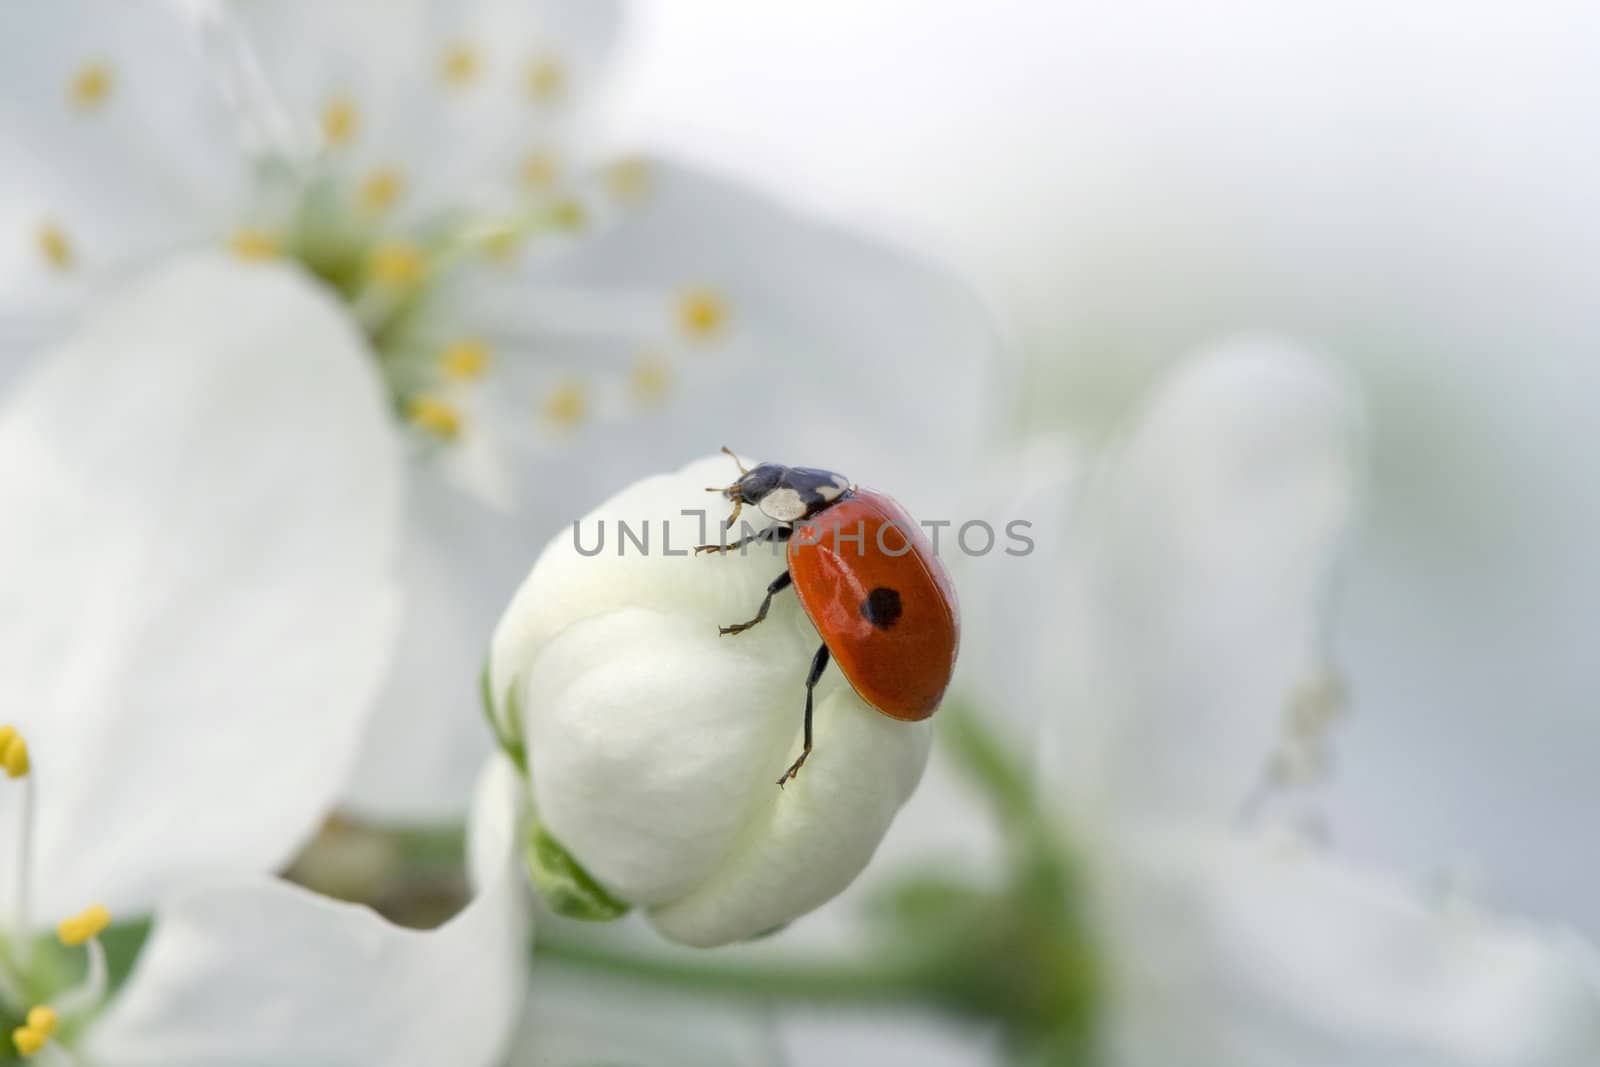 Ladybug on spring flower